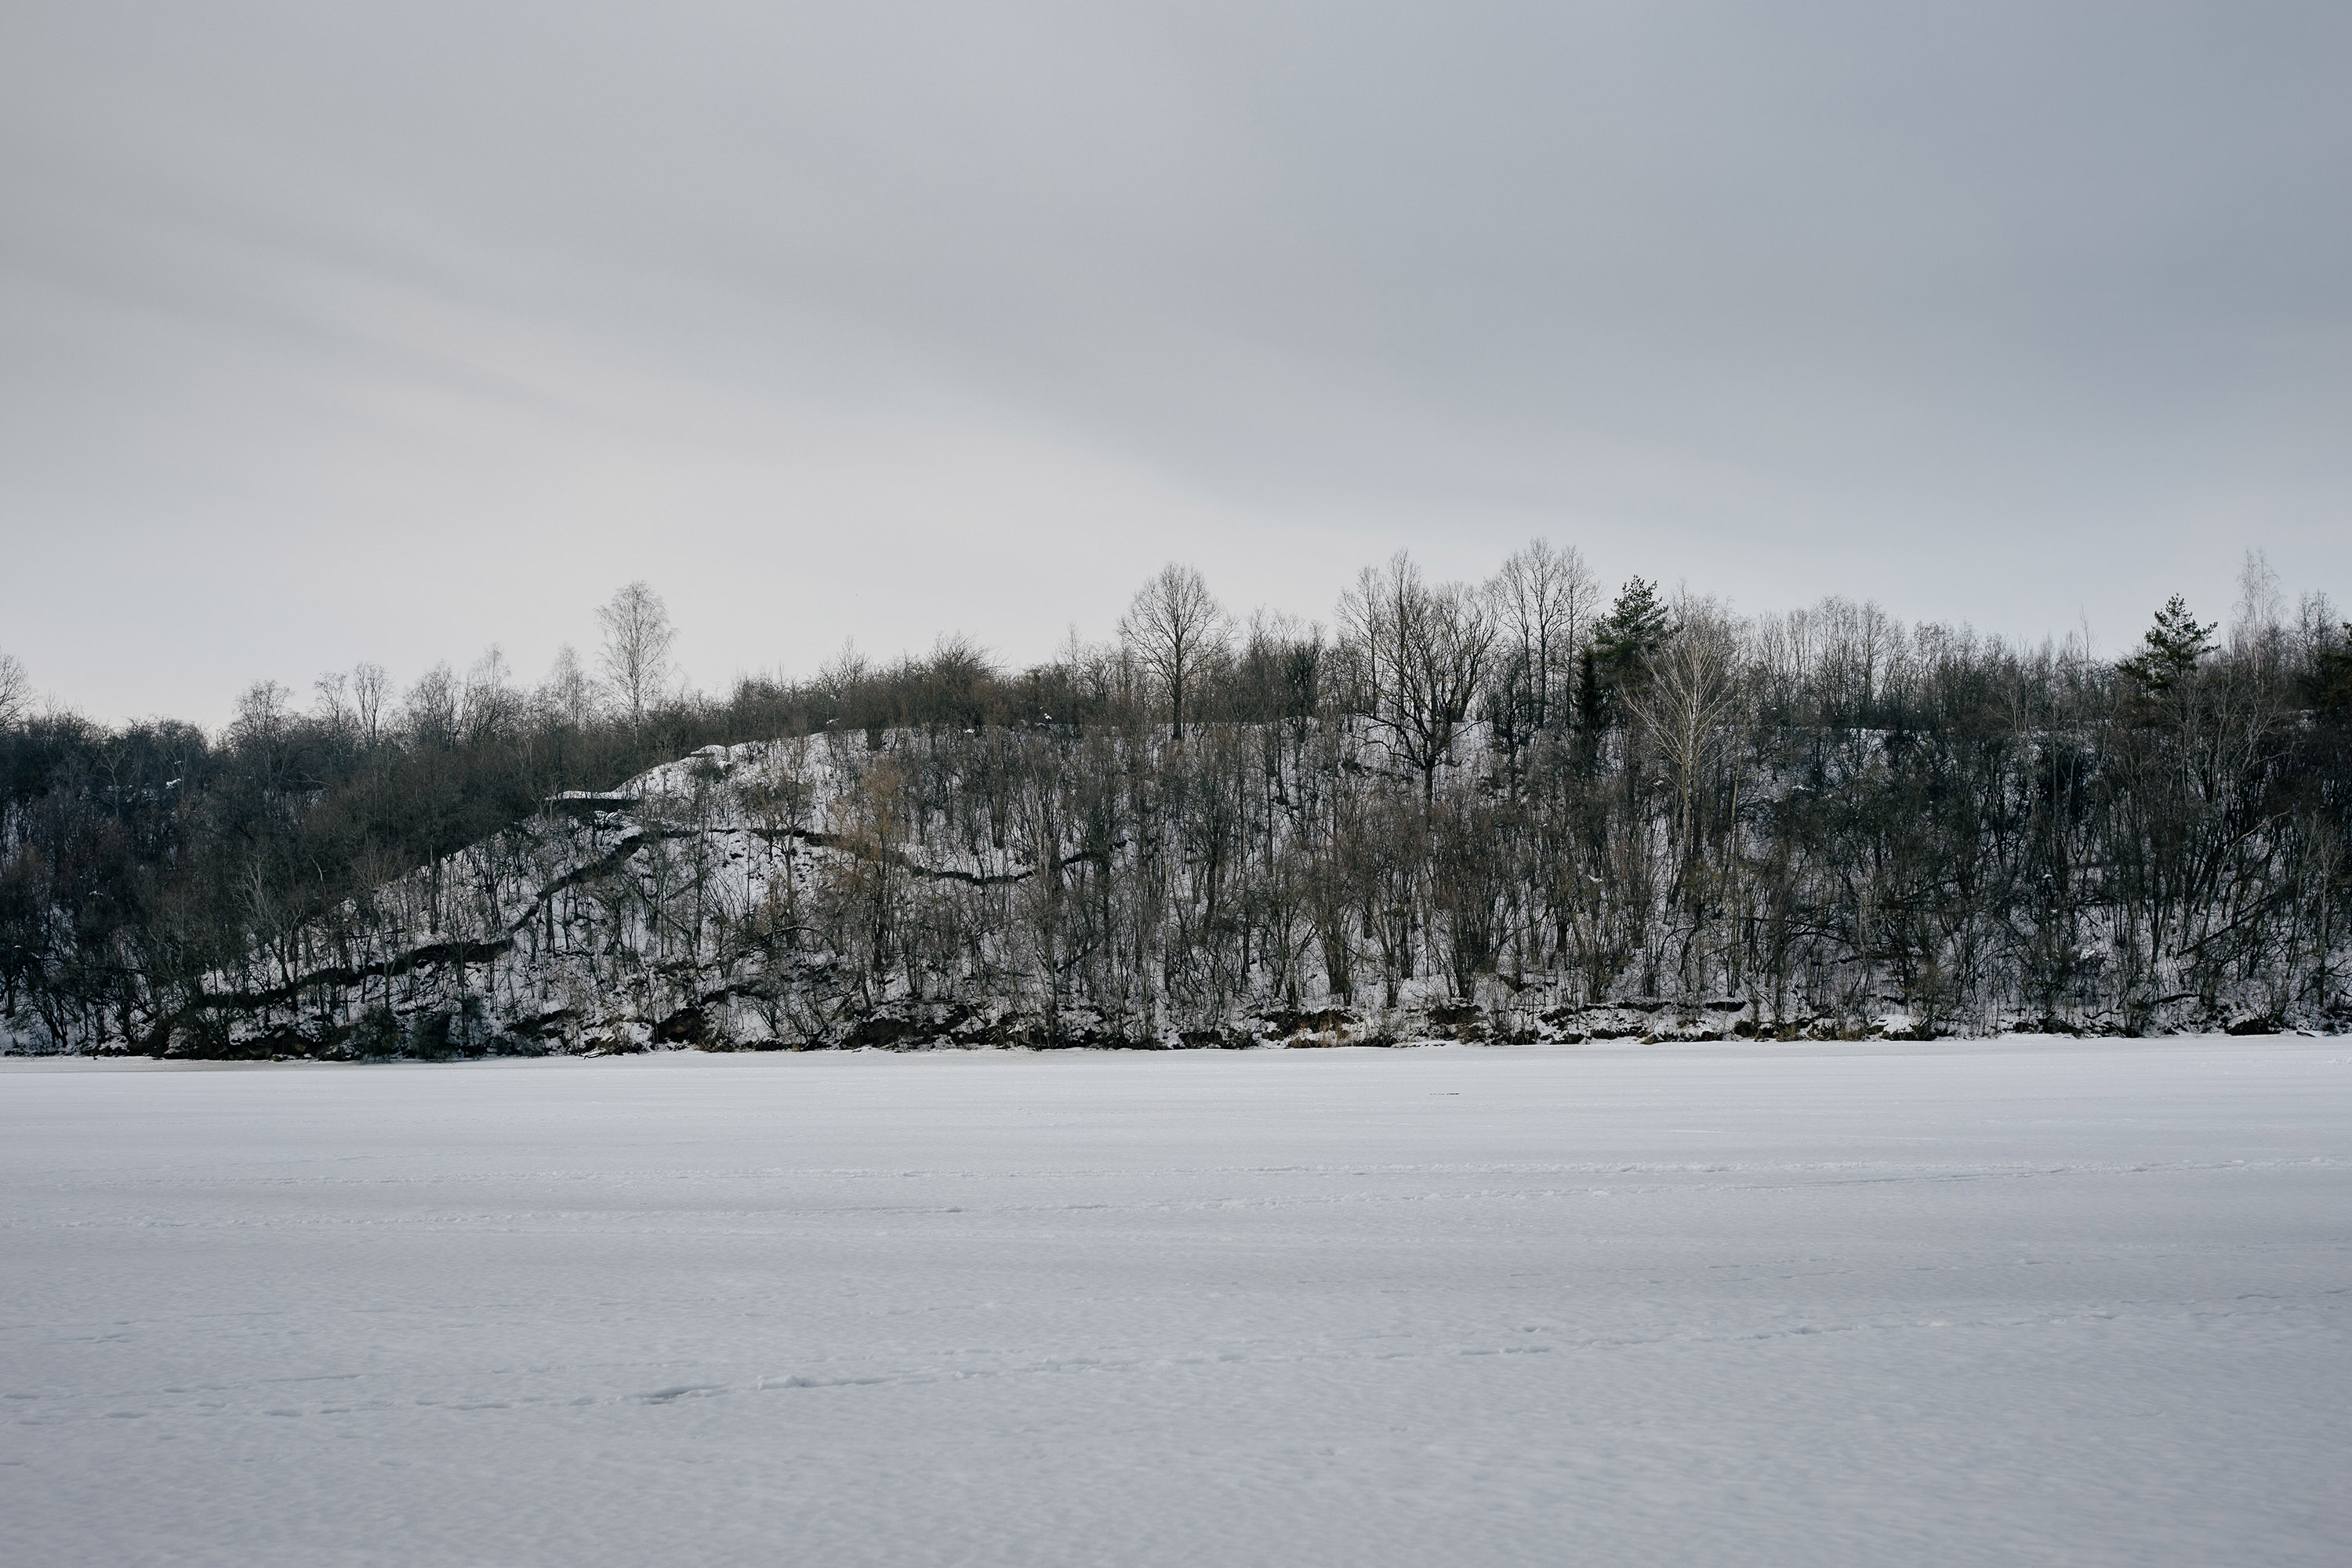 Frozen eroding cliff - Contarex 50mm f2